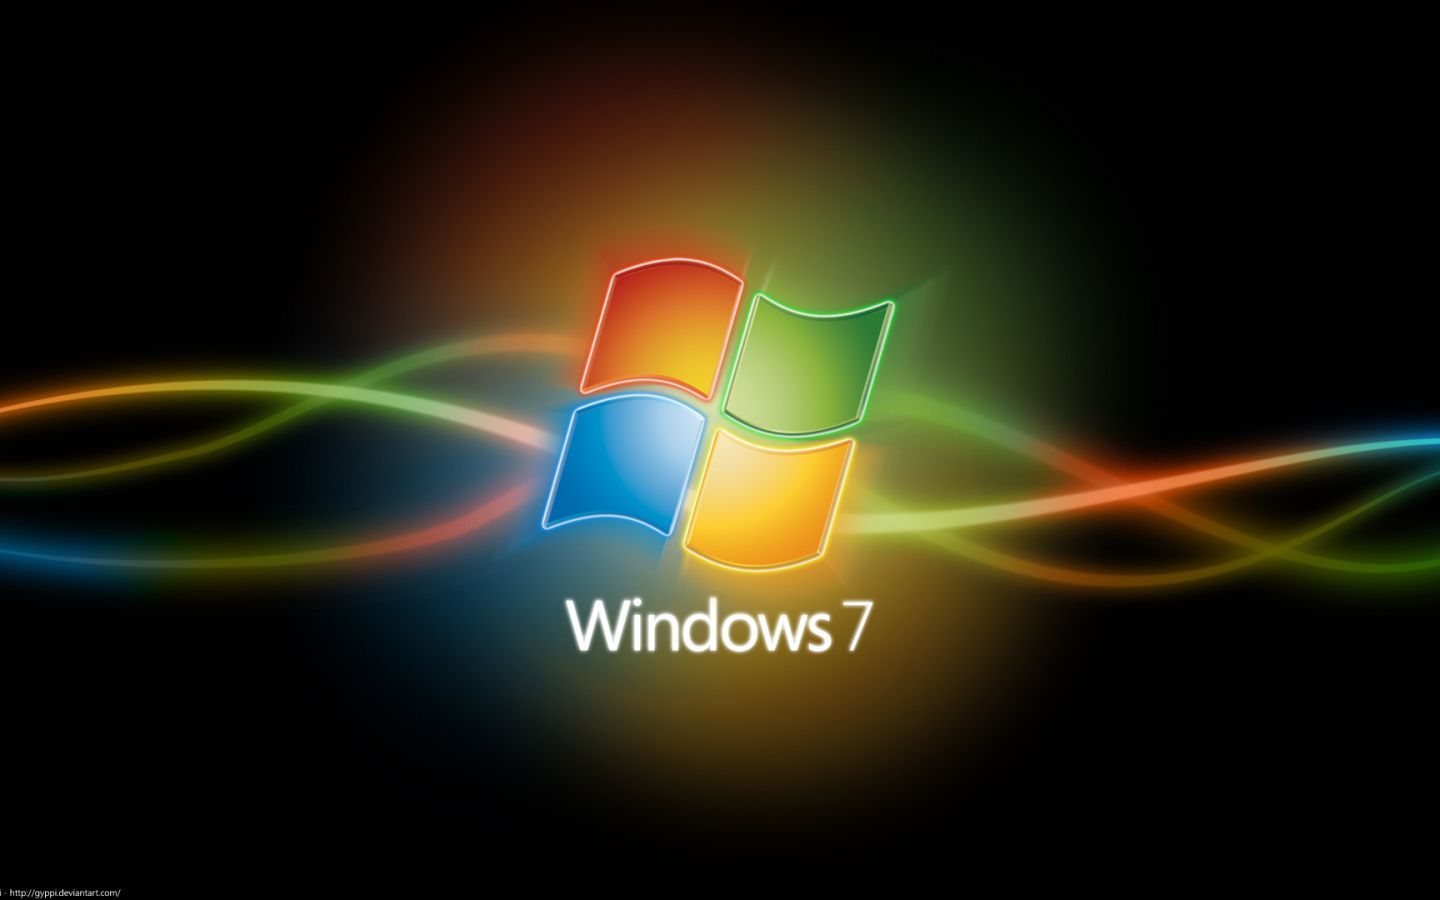 Windows 7 Gif wallpaper in 1440x900 resolution